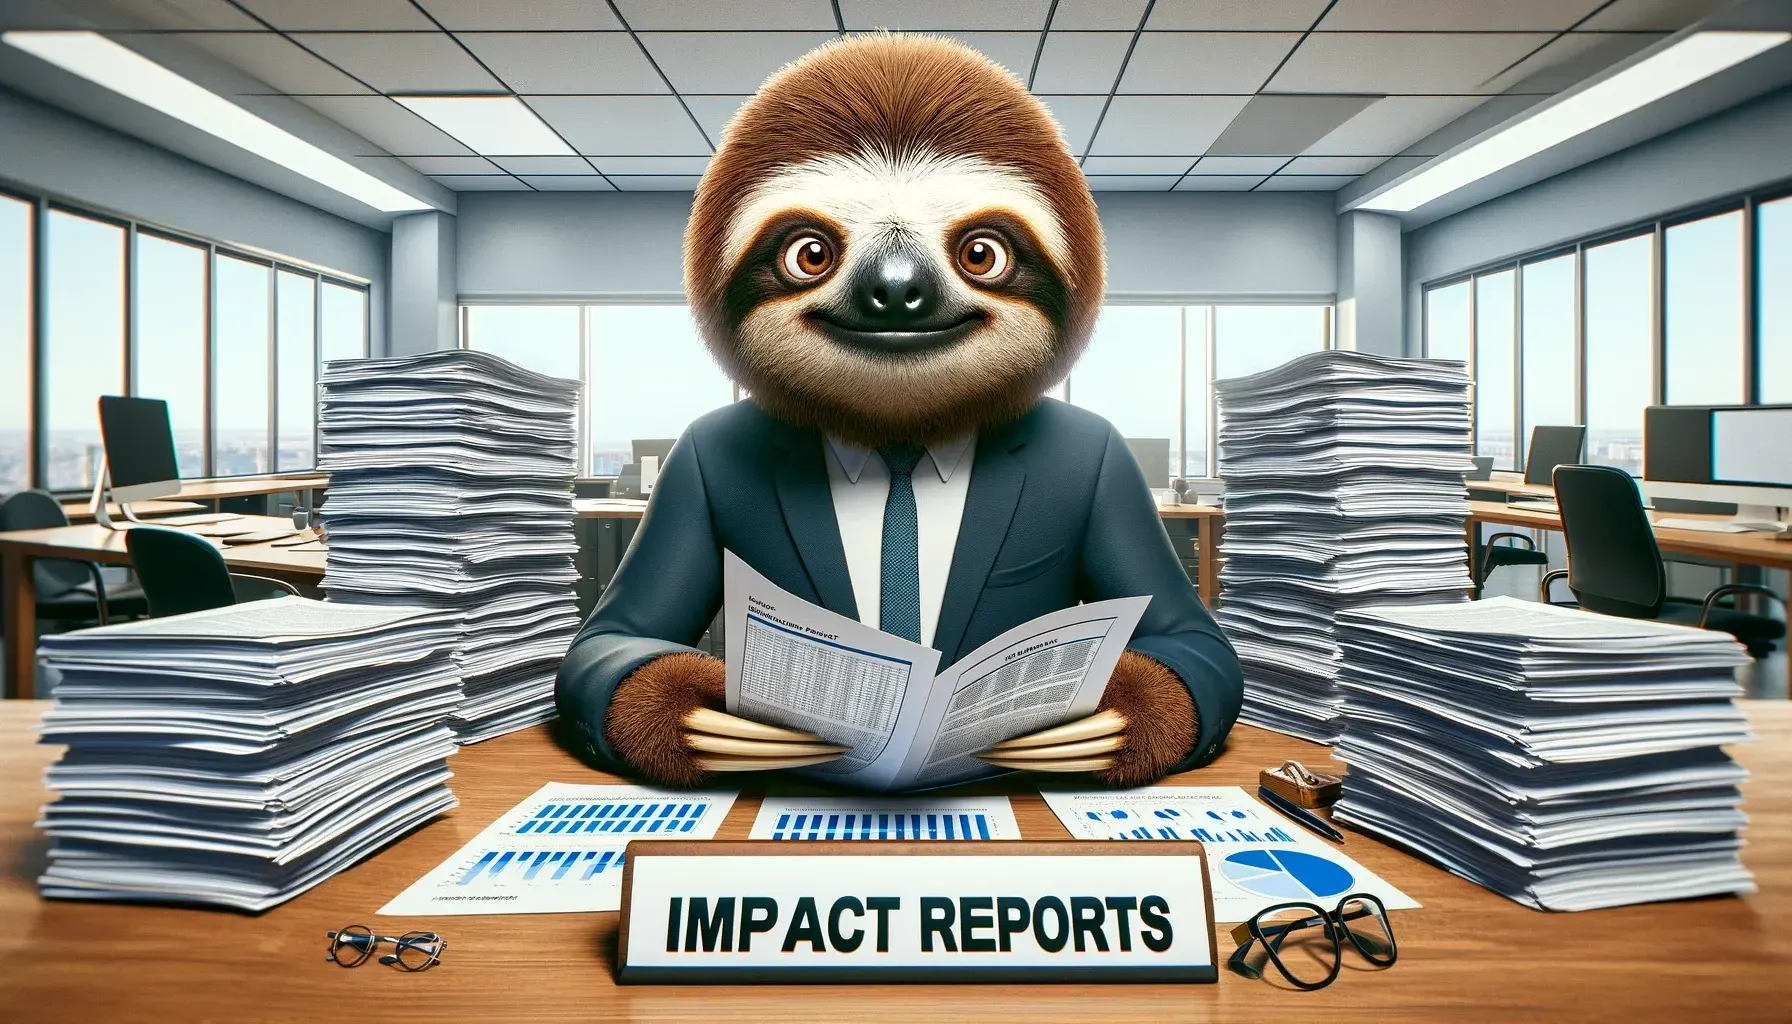 Impact reports sloth